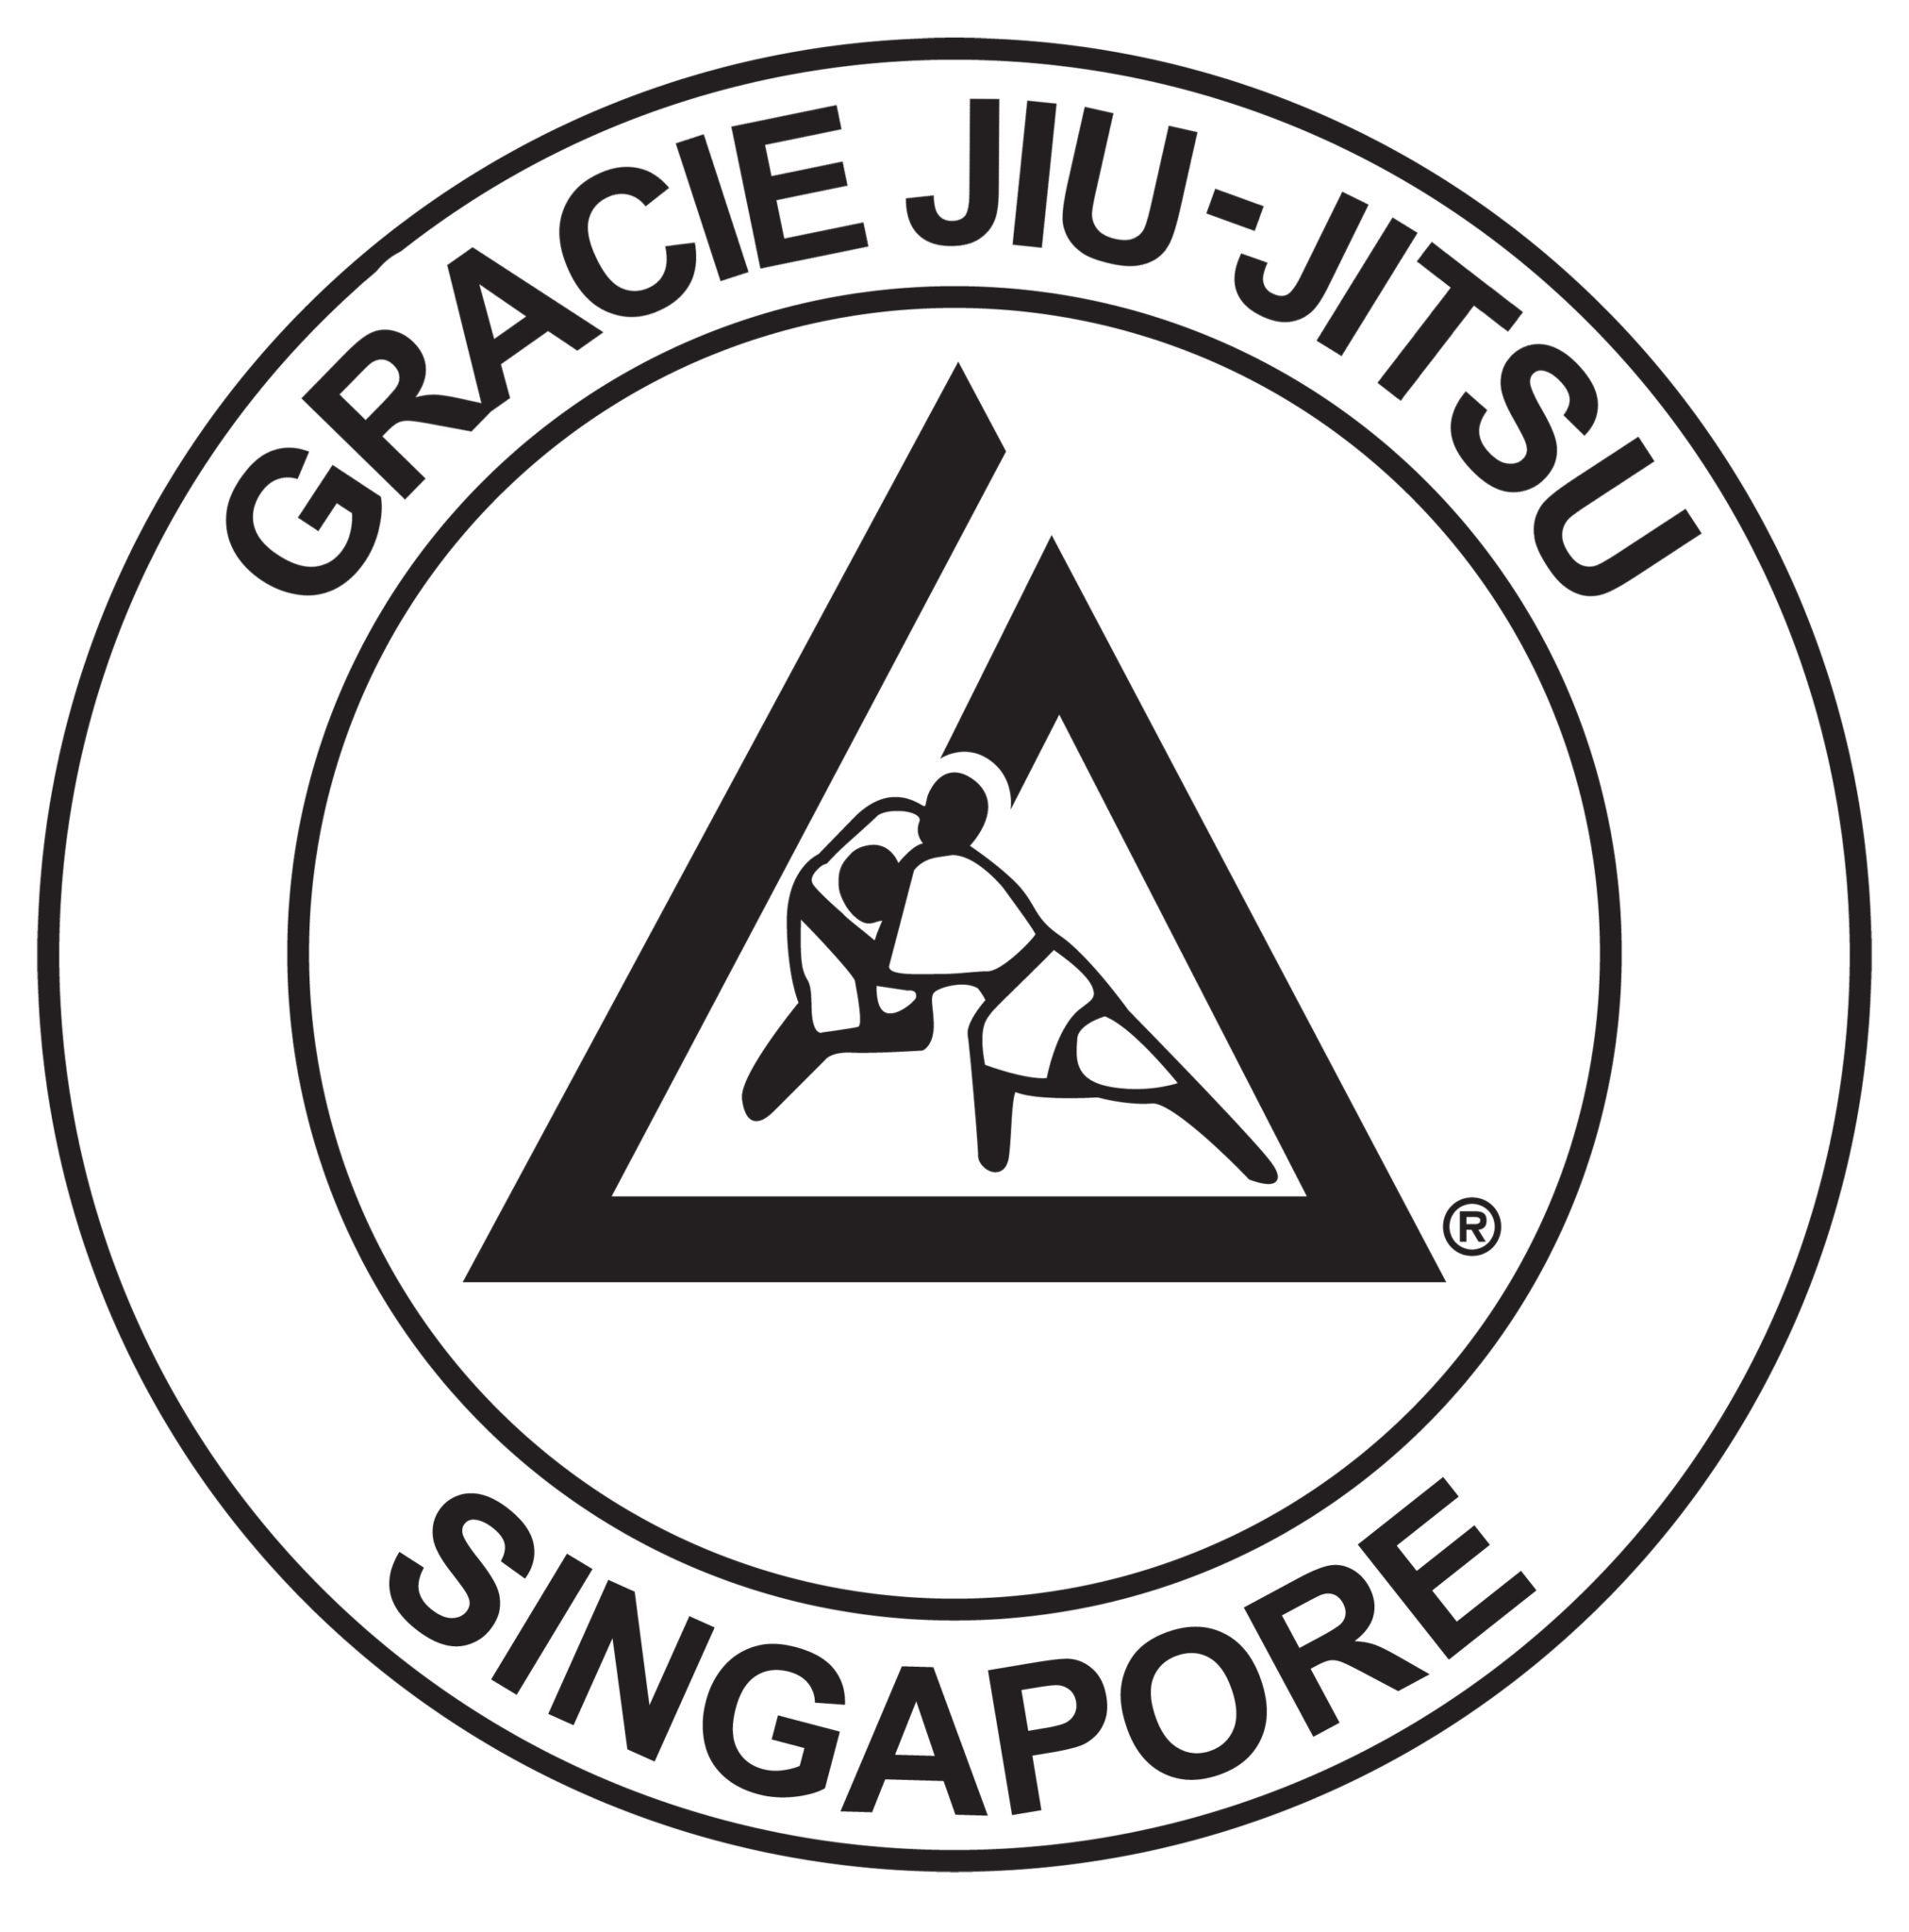 Academy gracie jiu jitsu Socks sold by Brief Normalcy